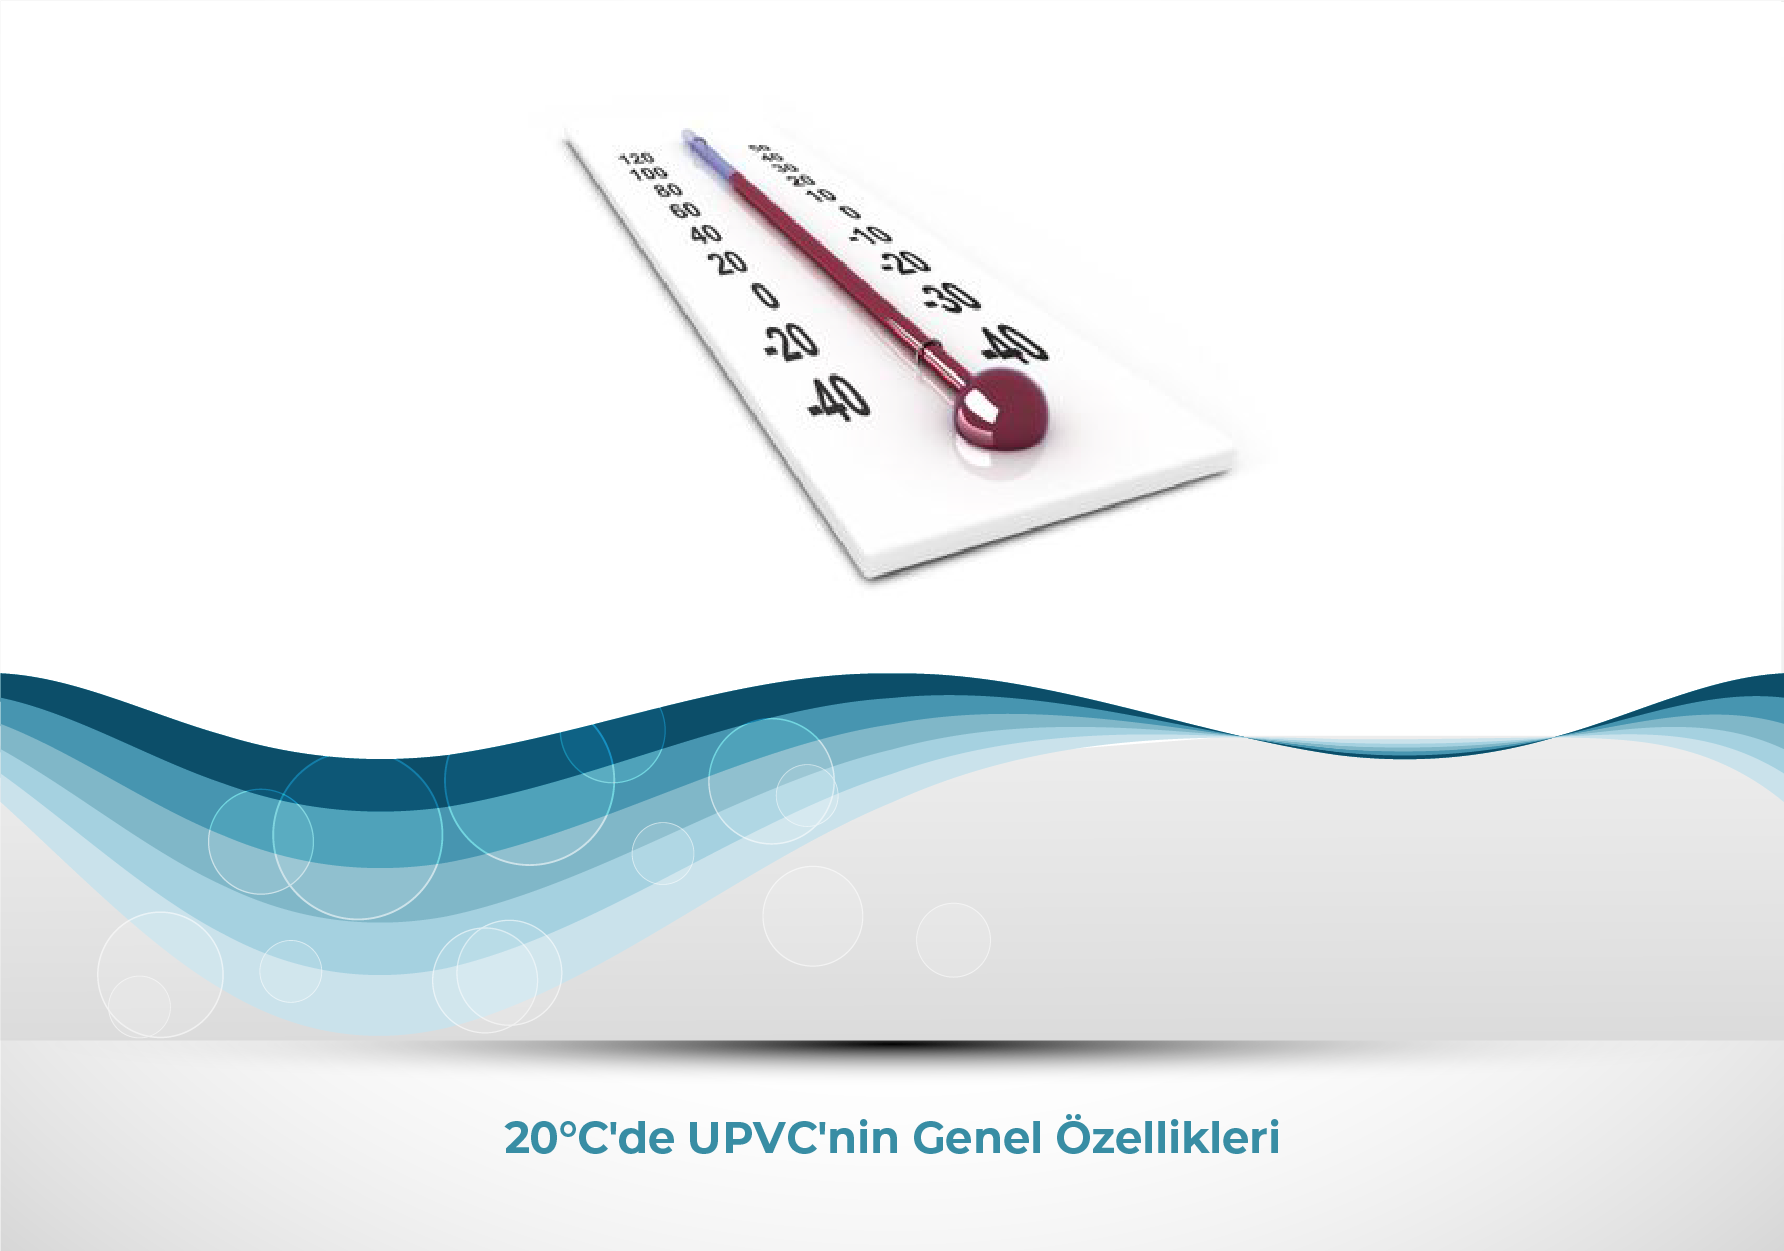 General Properties Of UPVC At 20 °C